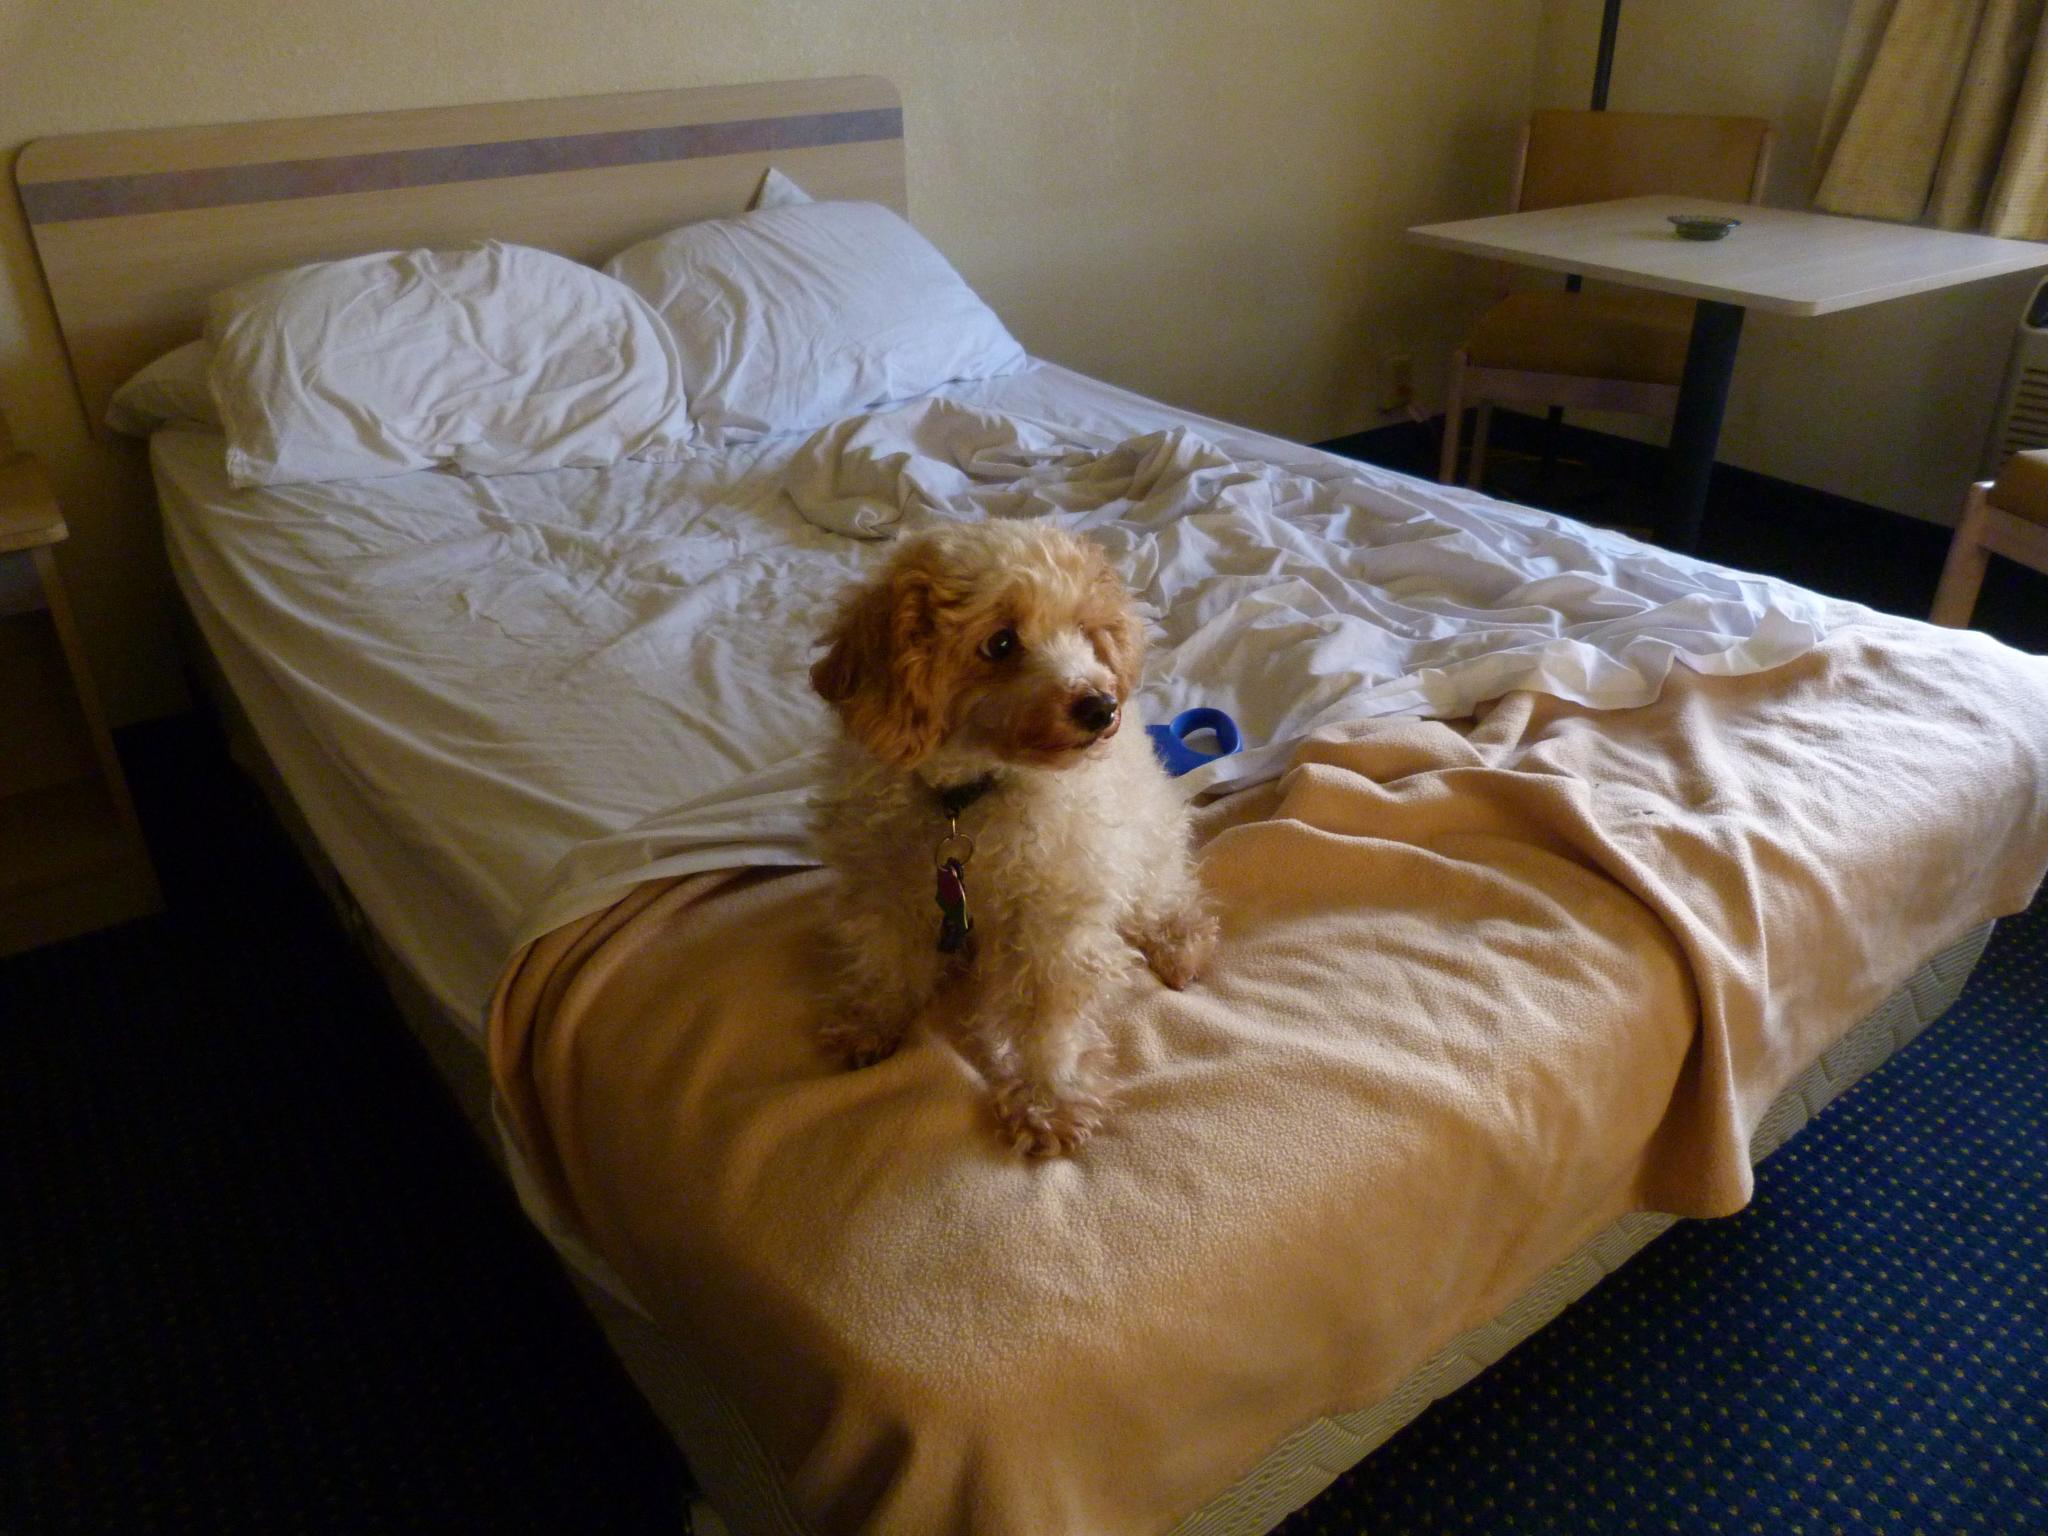 File:Motel-6-dog-on-bed.jpg - Wikimedia Commons